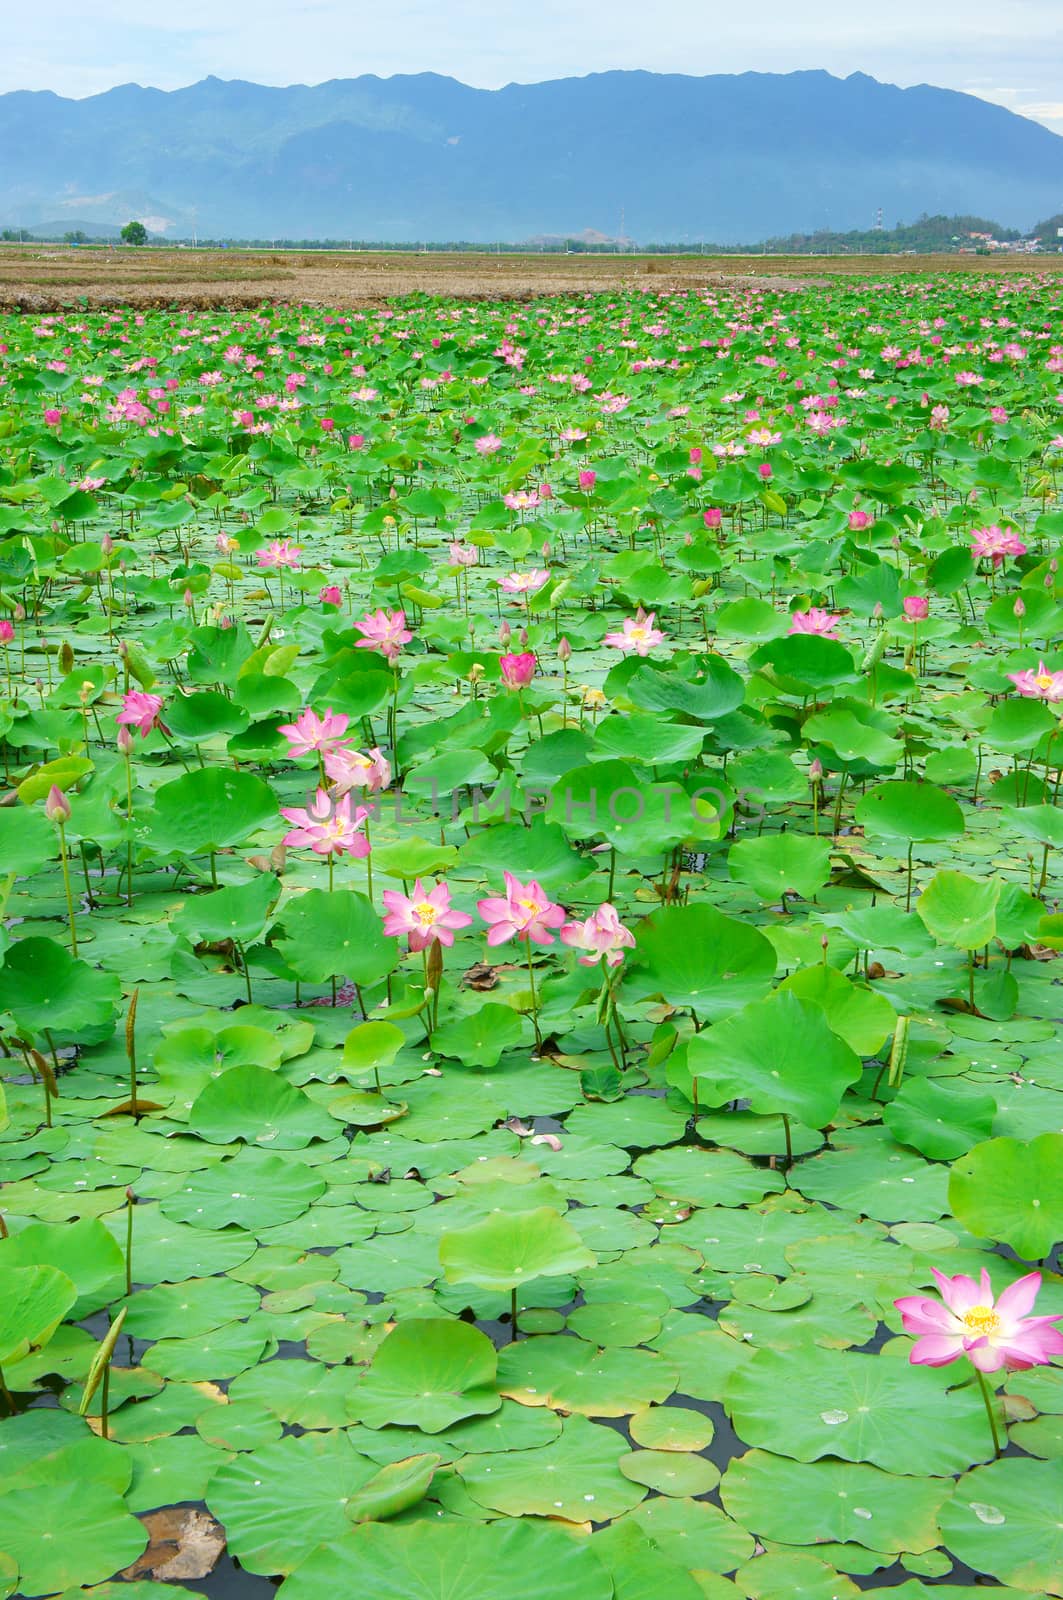 Vietnam flower, lotus flower, lotus pond by xuanhuongho